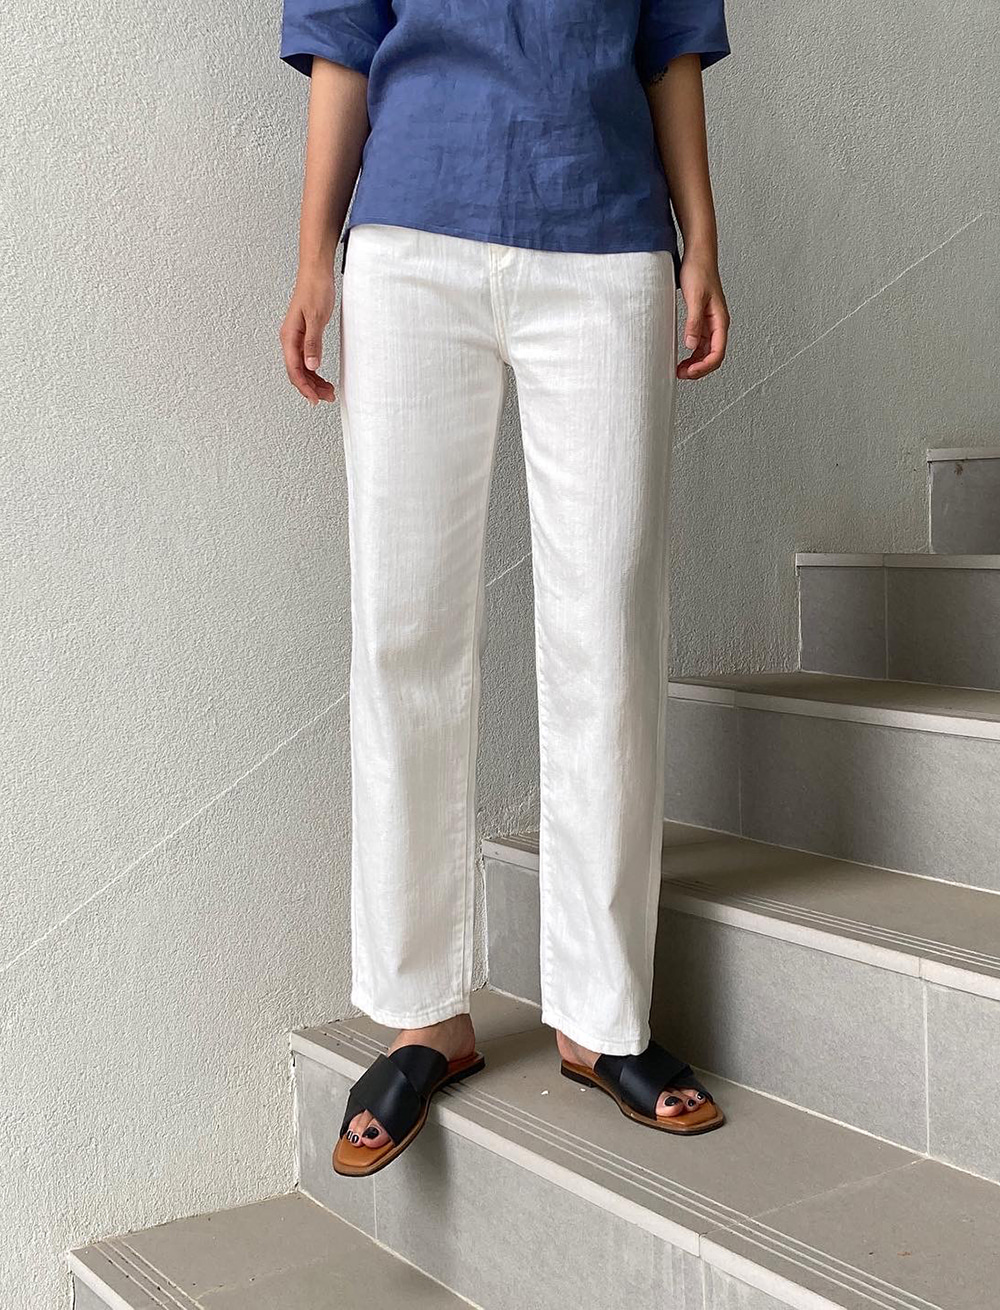 summer white jeans